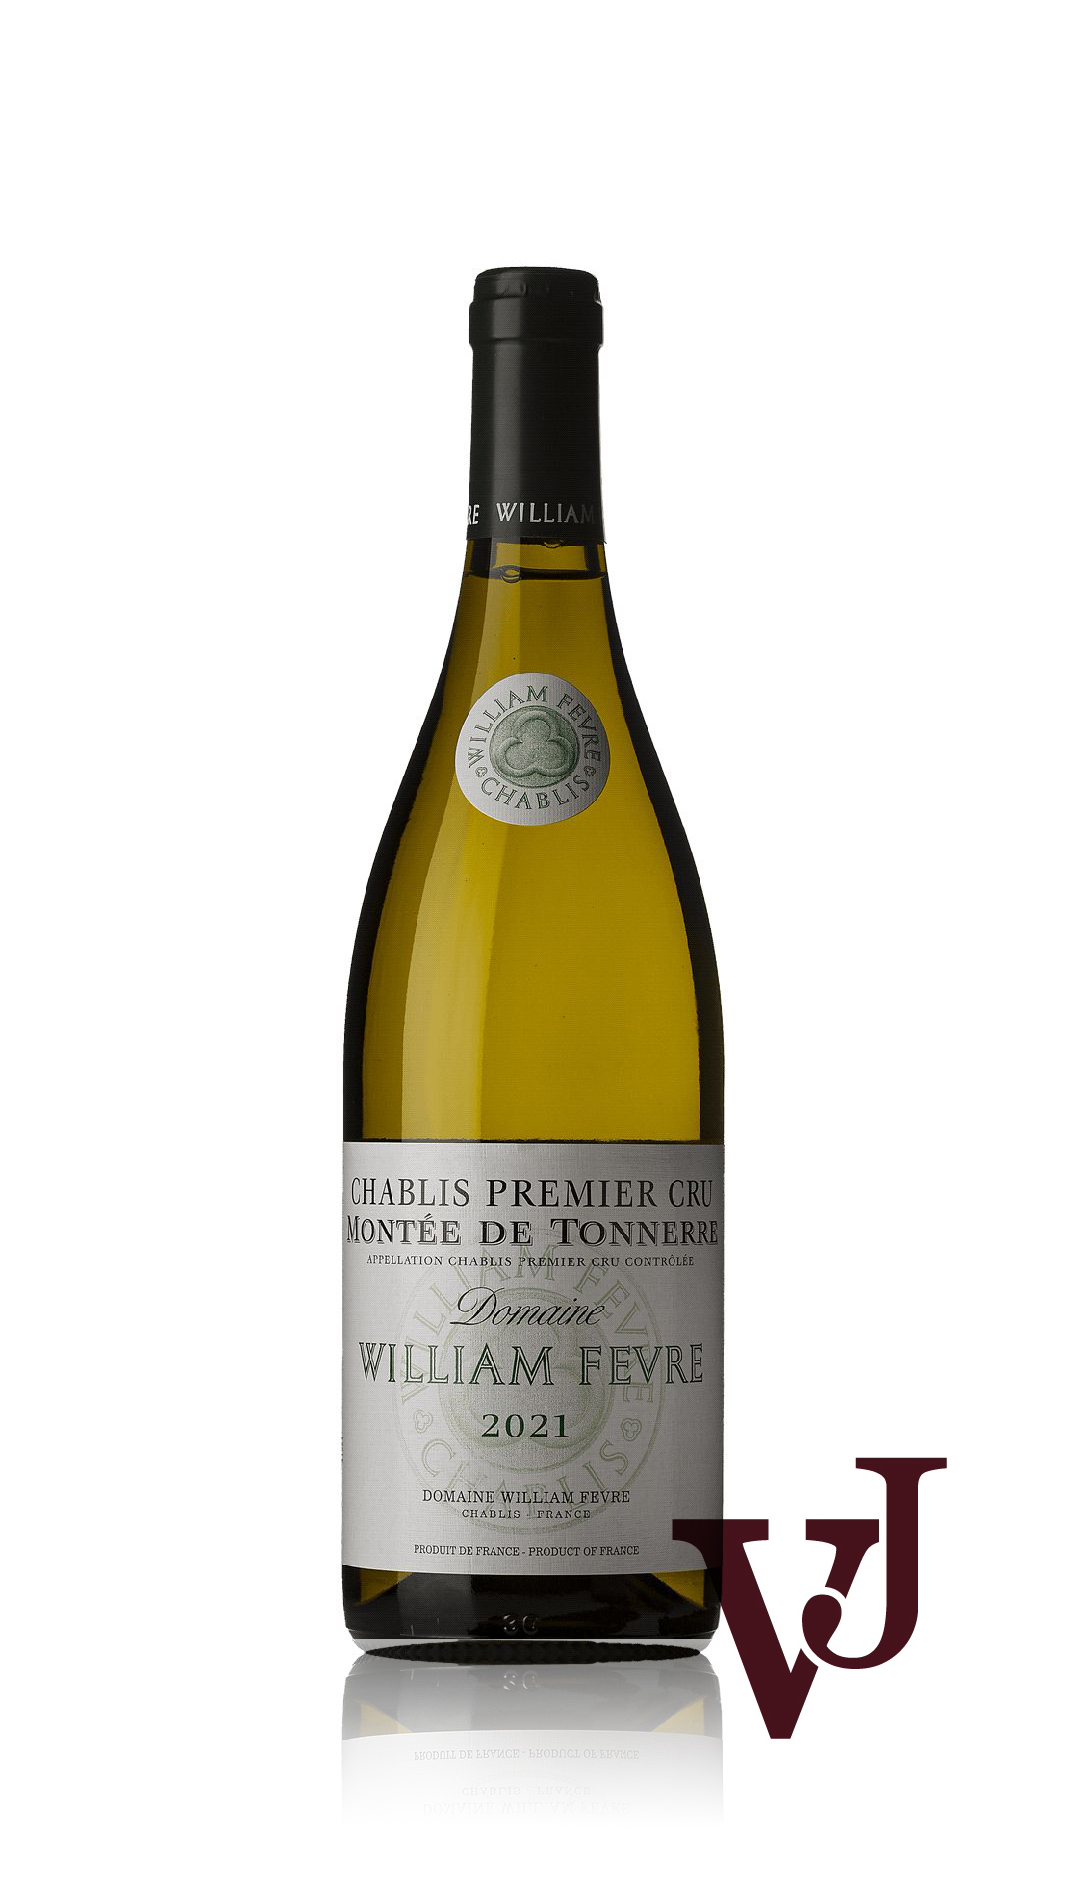 Vitt Vin - Chablis Premier Cru Montée de Tonnerre William Fèvre 2021 artikel nummer 9509301 från producenten Domaine William Fèvre från området Frankrike